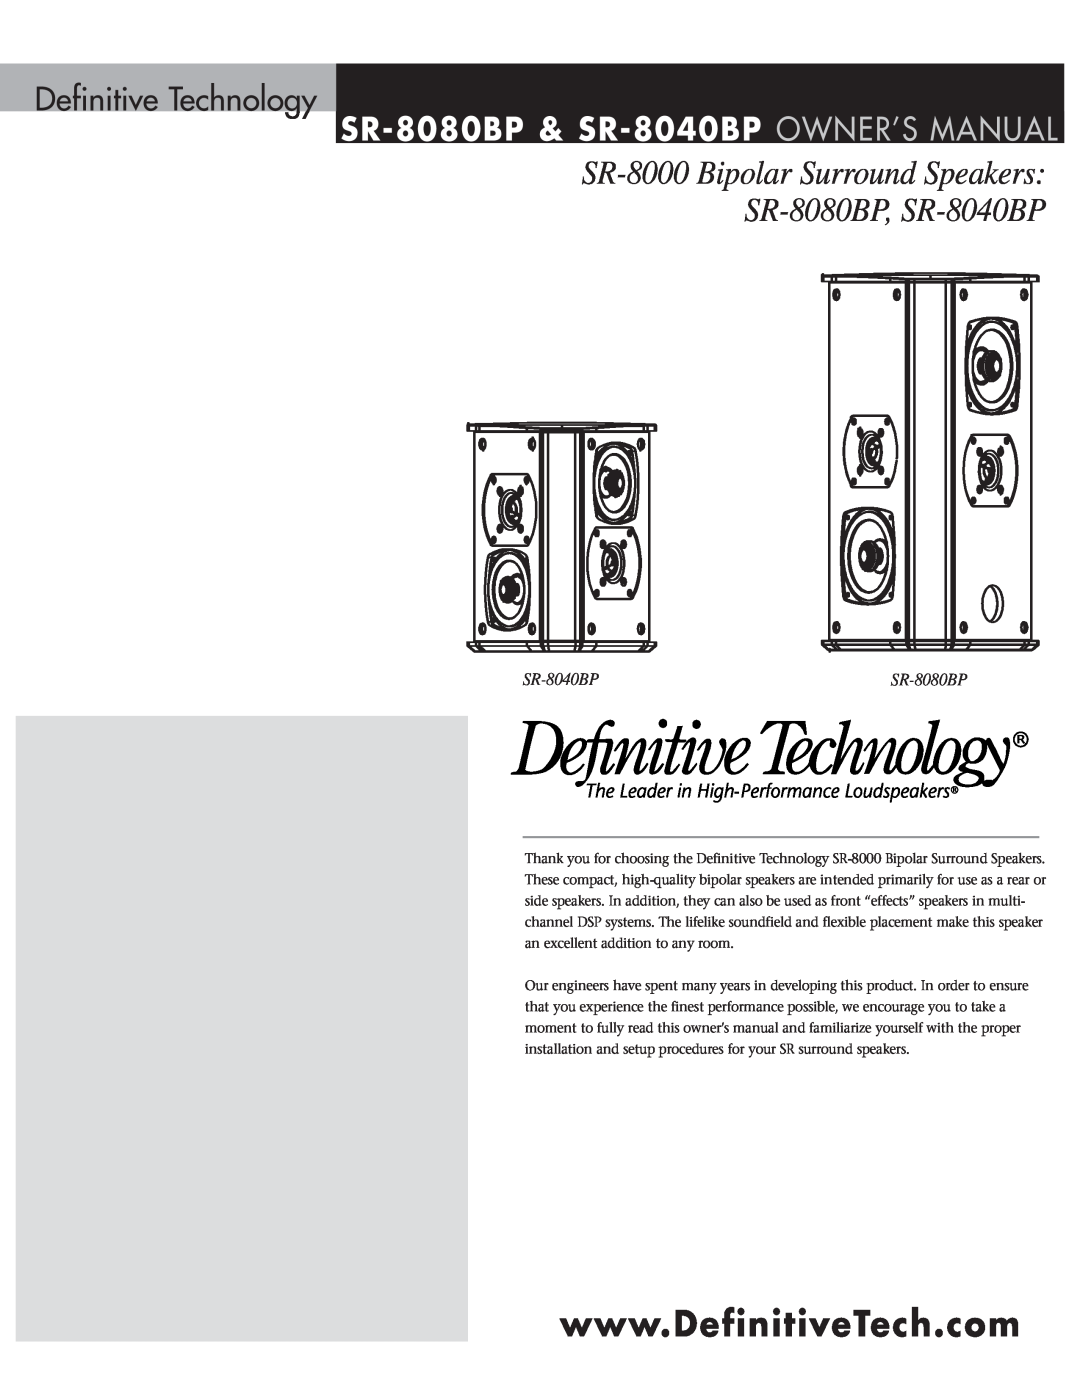 Definitive Technology owner manual Definitive Technology, SR-8080BP, SR-8040BP, SR-8000Bipolar Surround Speakers 